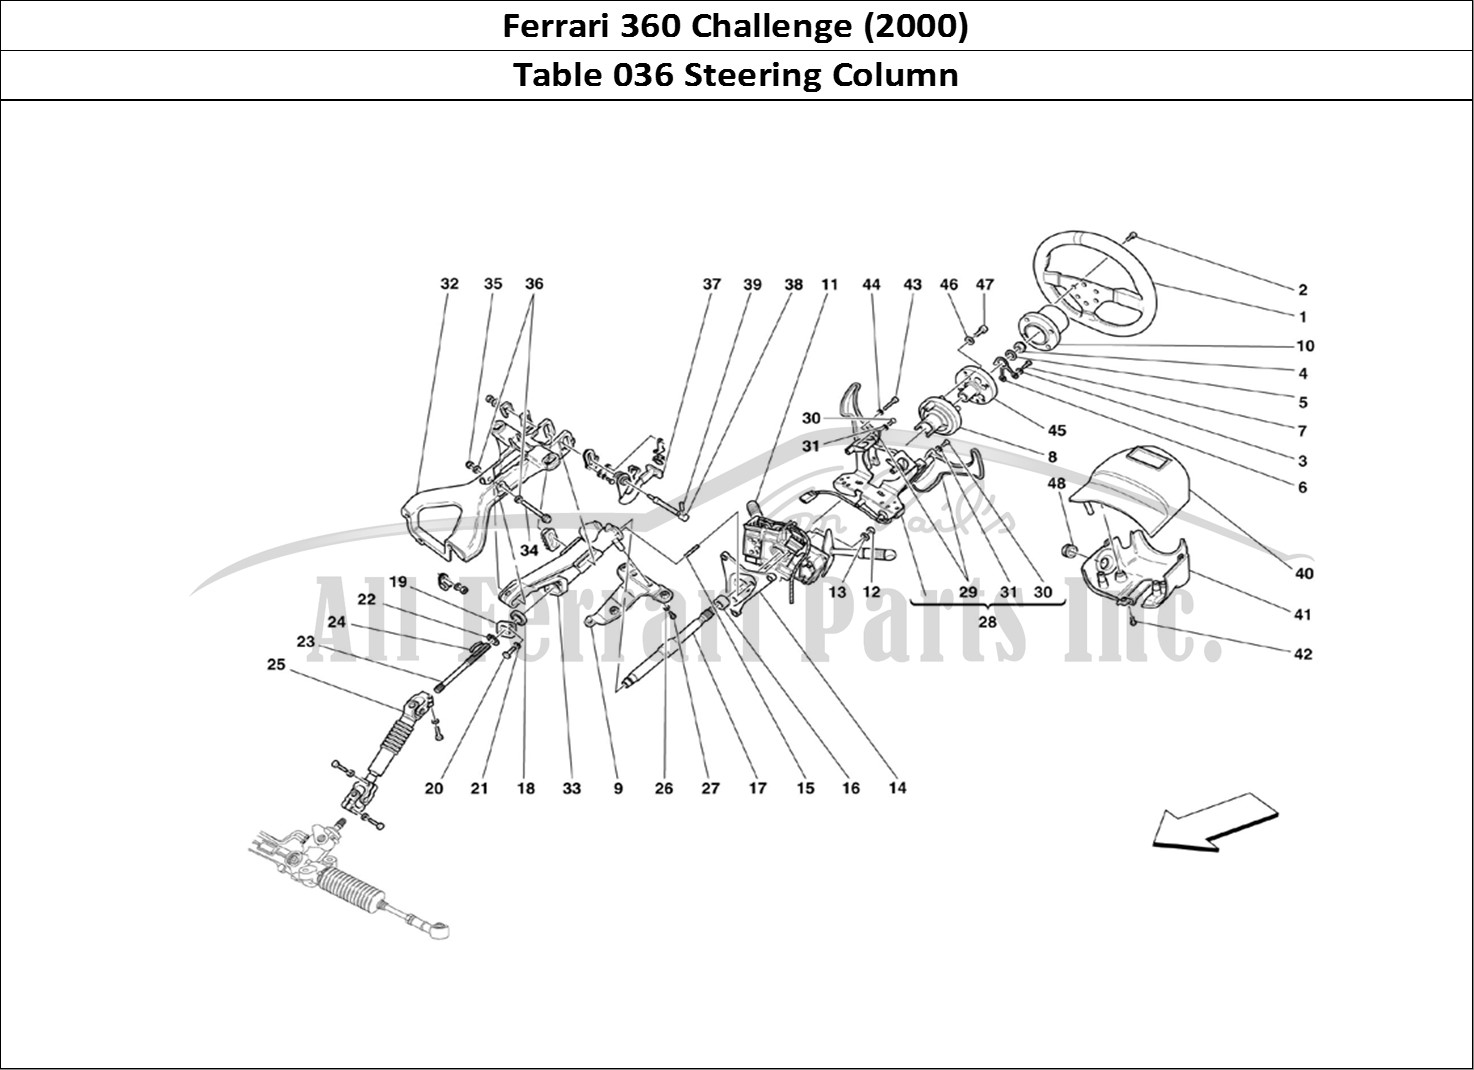 Ferrari Parts Ferrari 360 Challenge (2000) Page 036 Steering Column